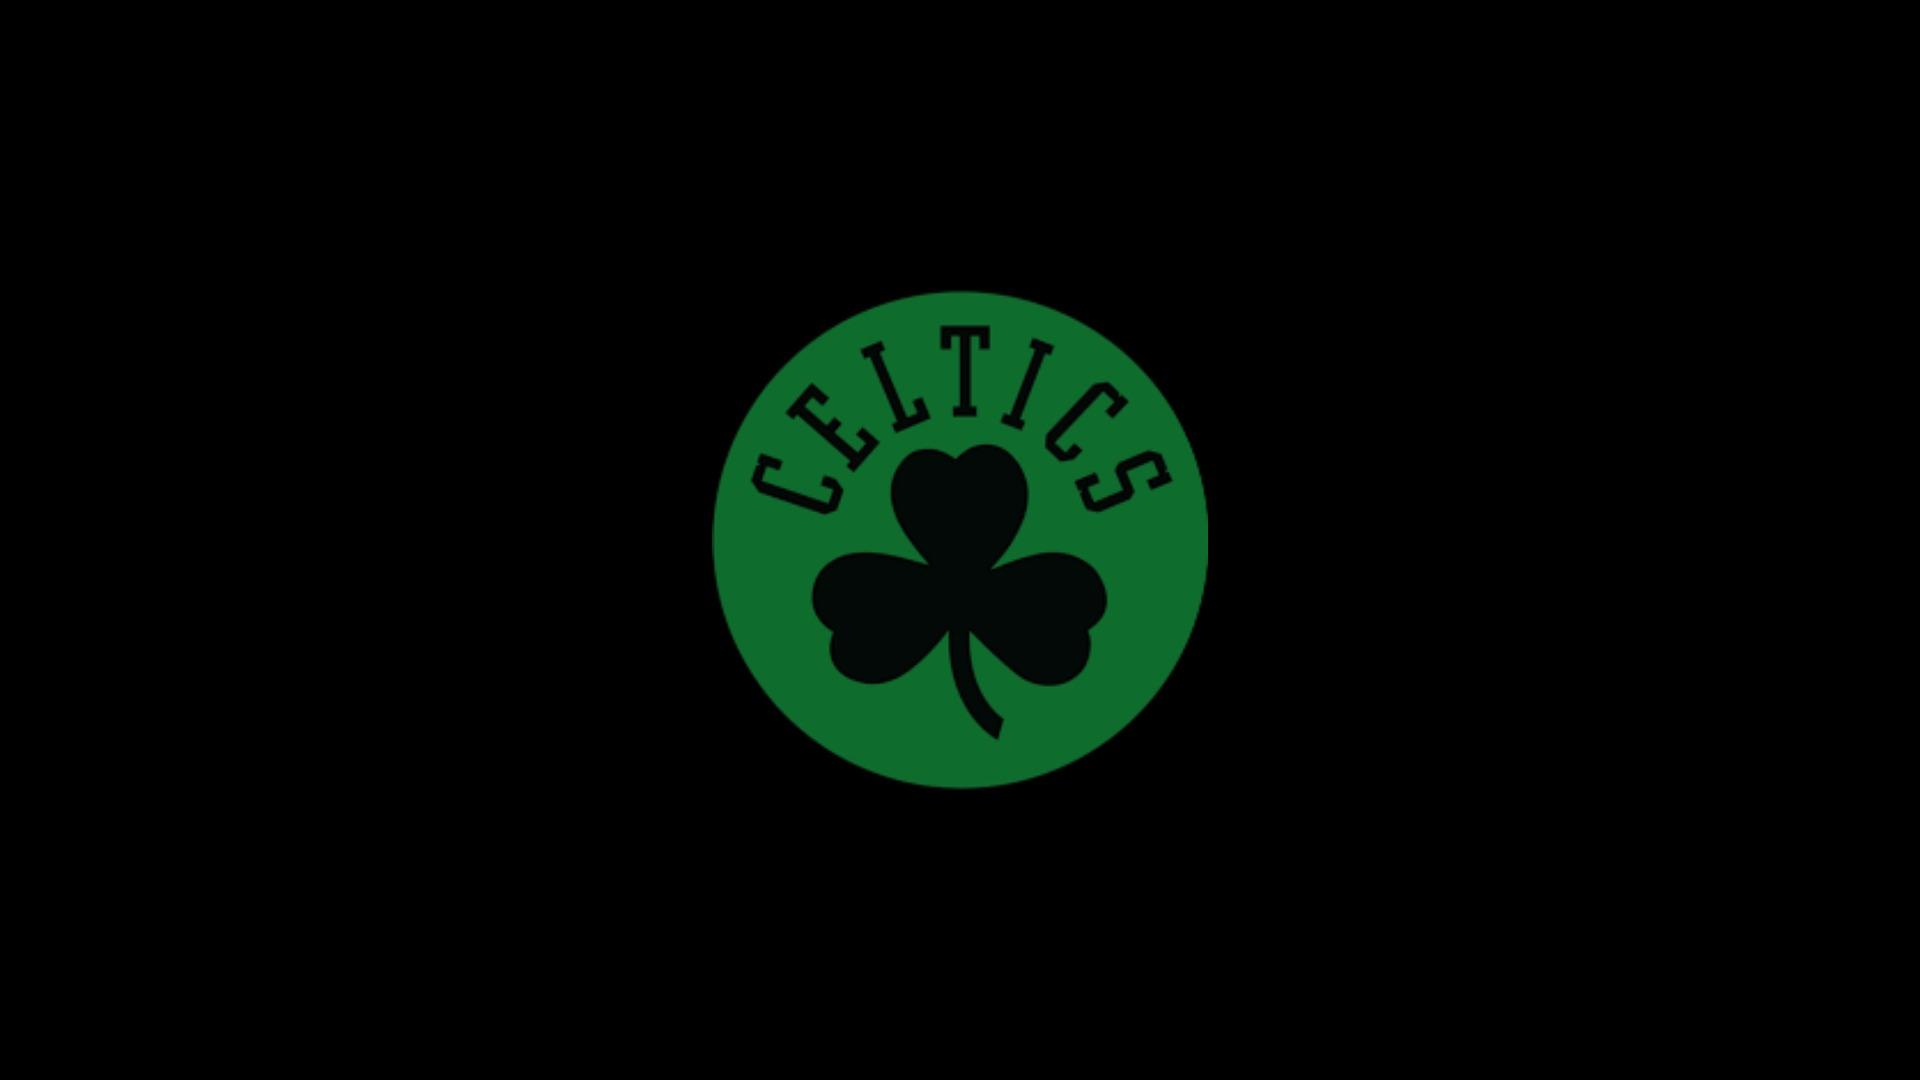 Celtics Logo Wallpapers Top Free Celtics Logo Backgrounds Wallpaperaccess